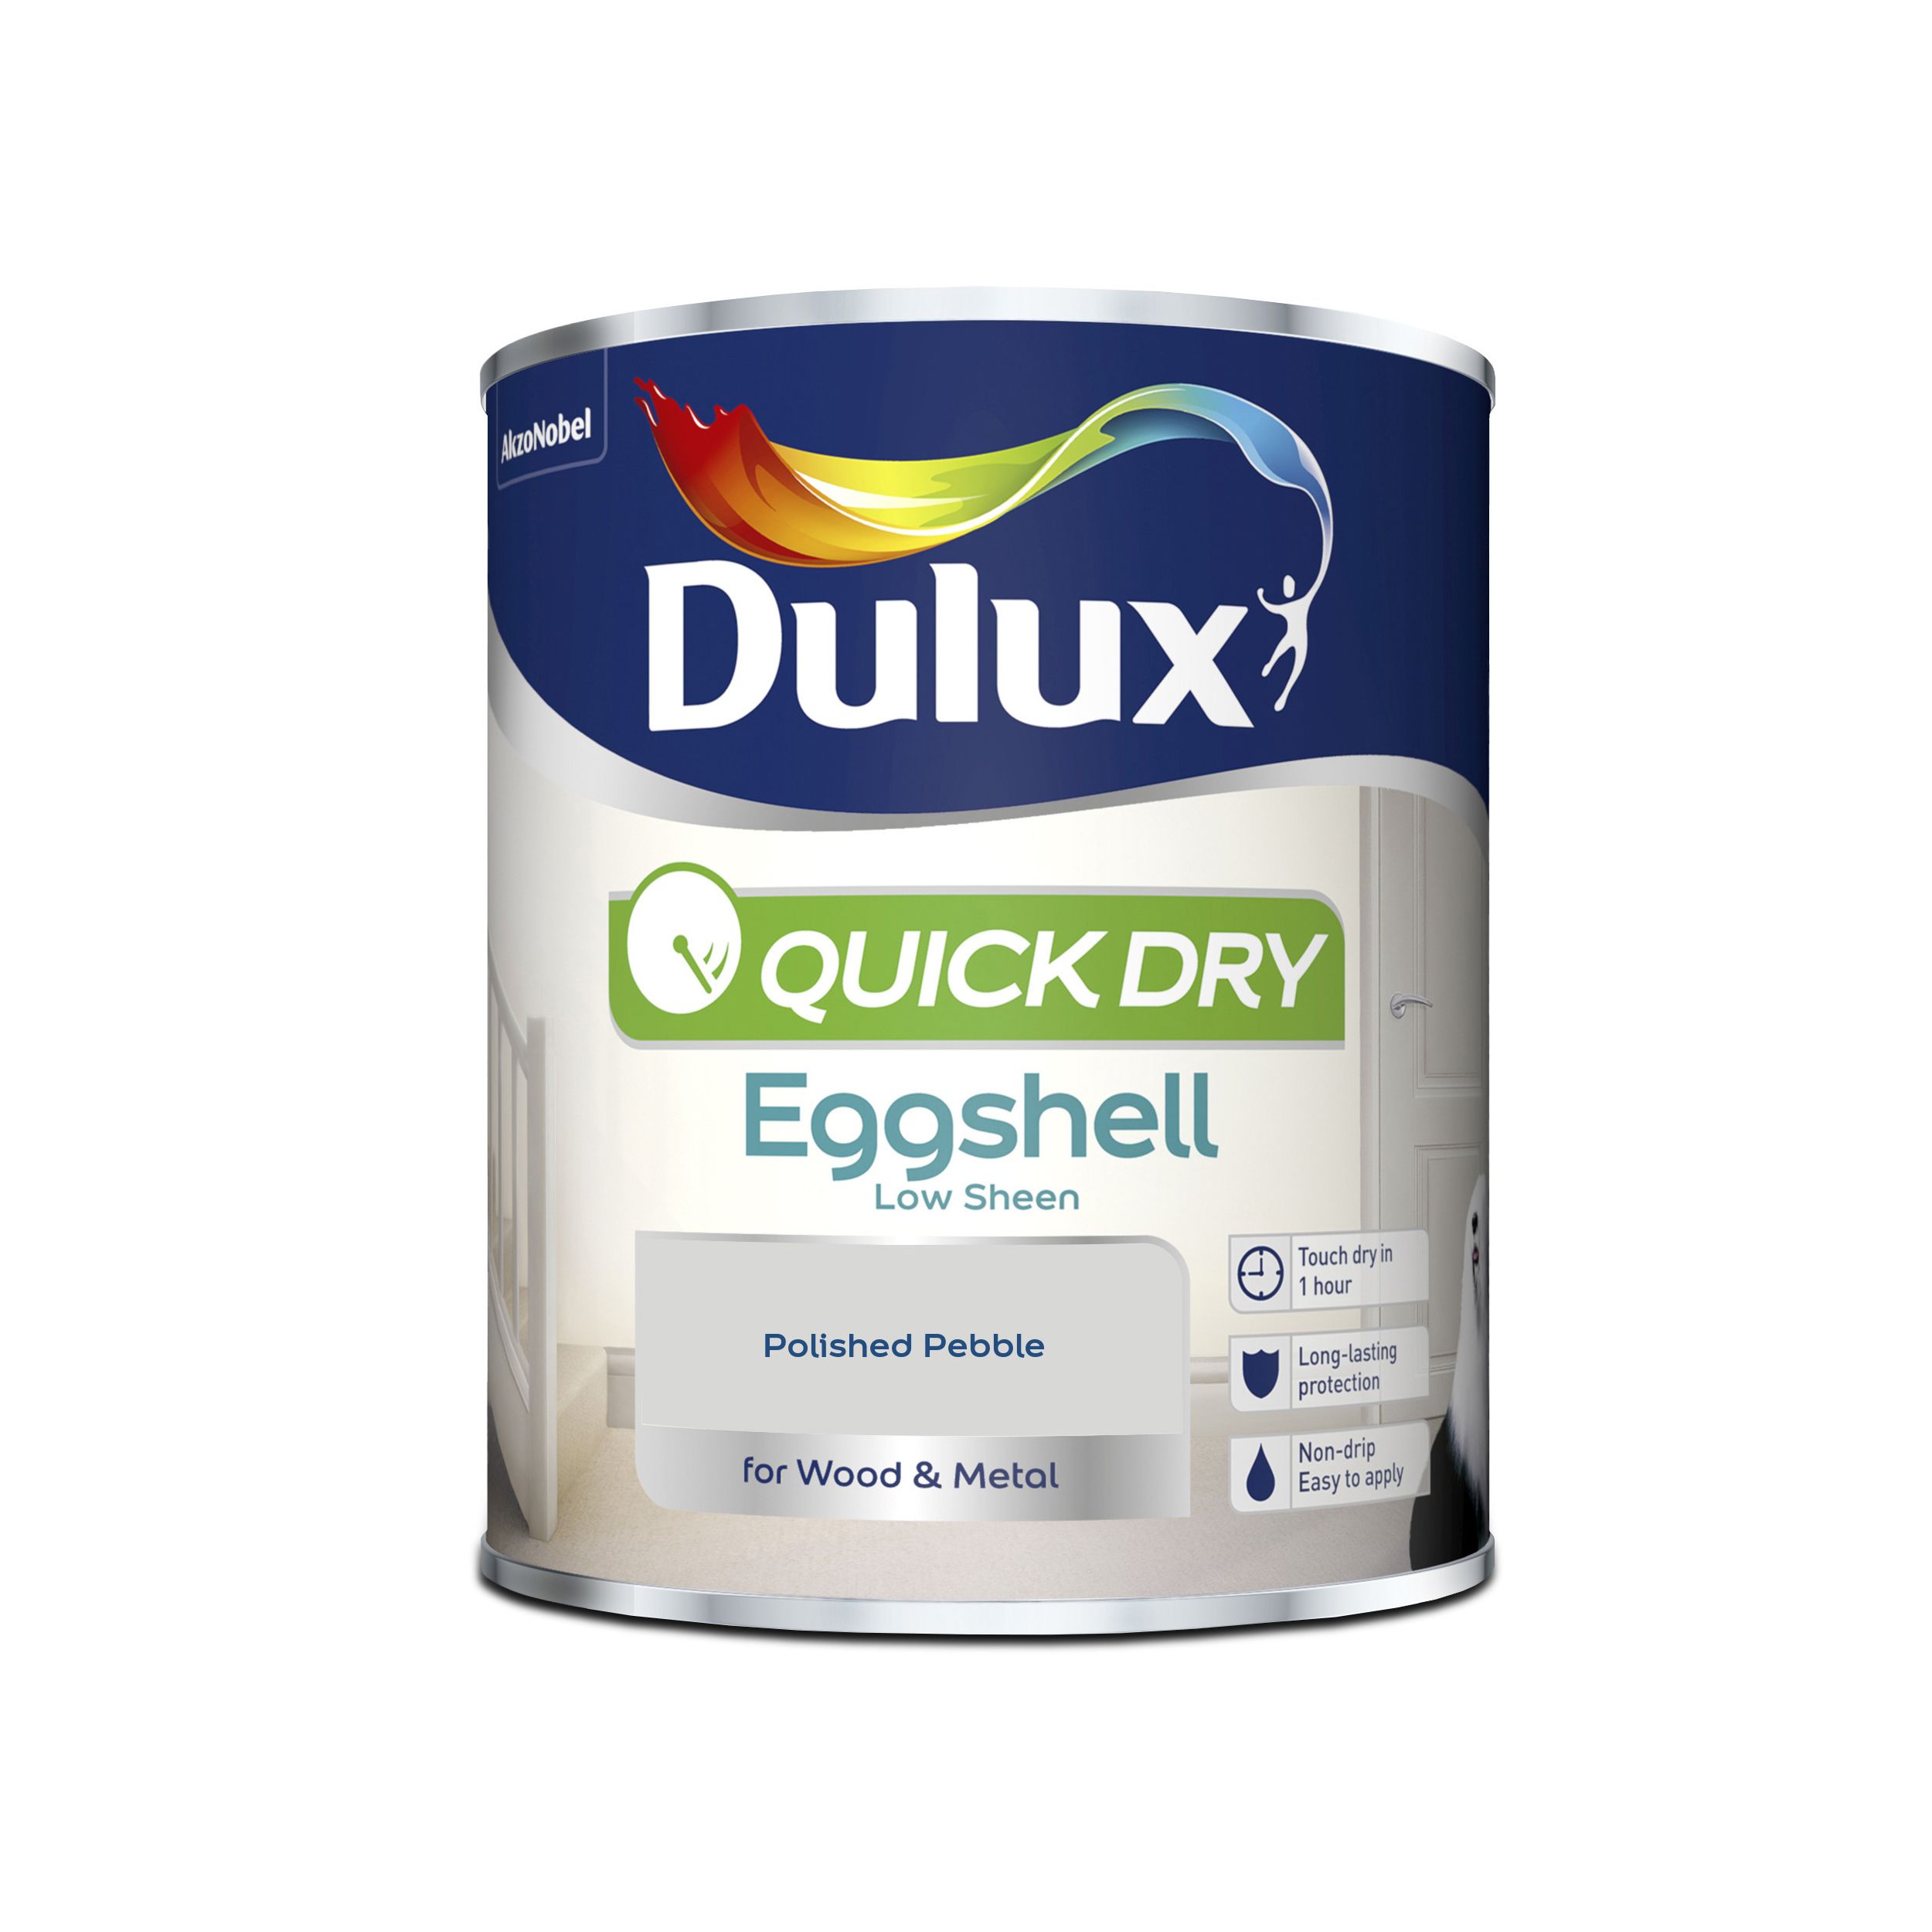 Dulux Quick dry Polished pebble Eggshell Metal & wood paint, 750ml